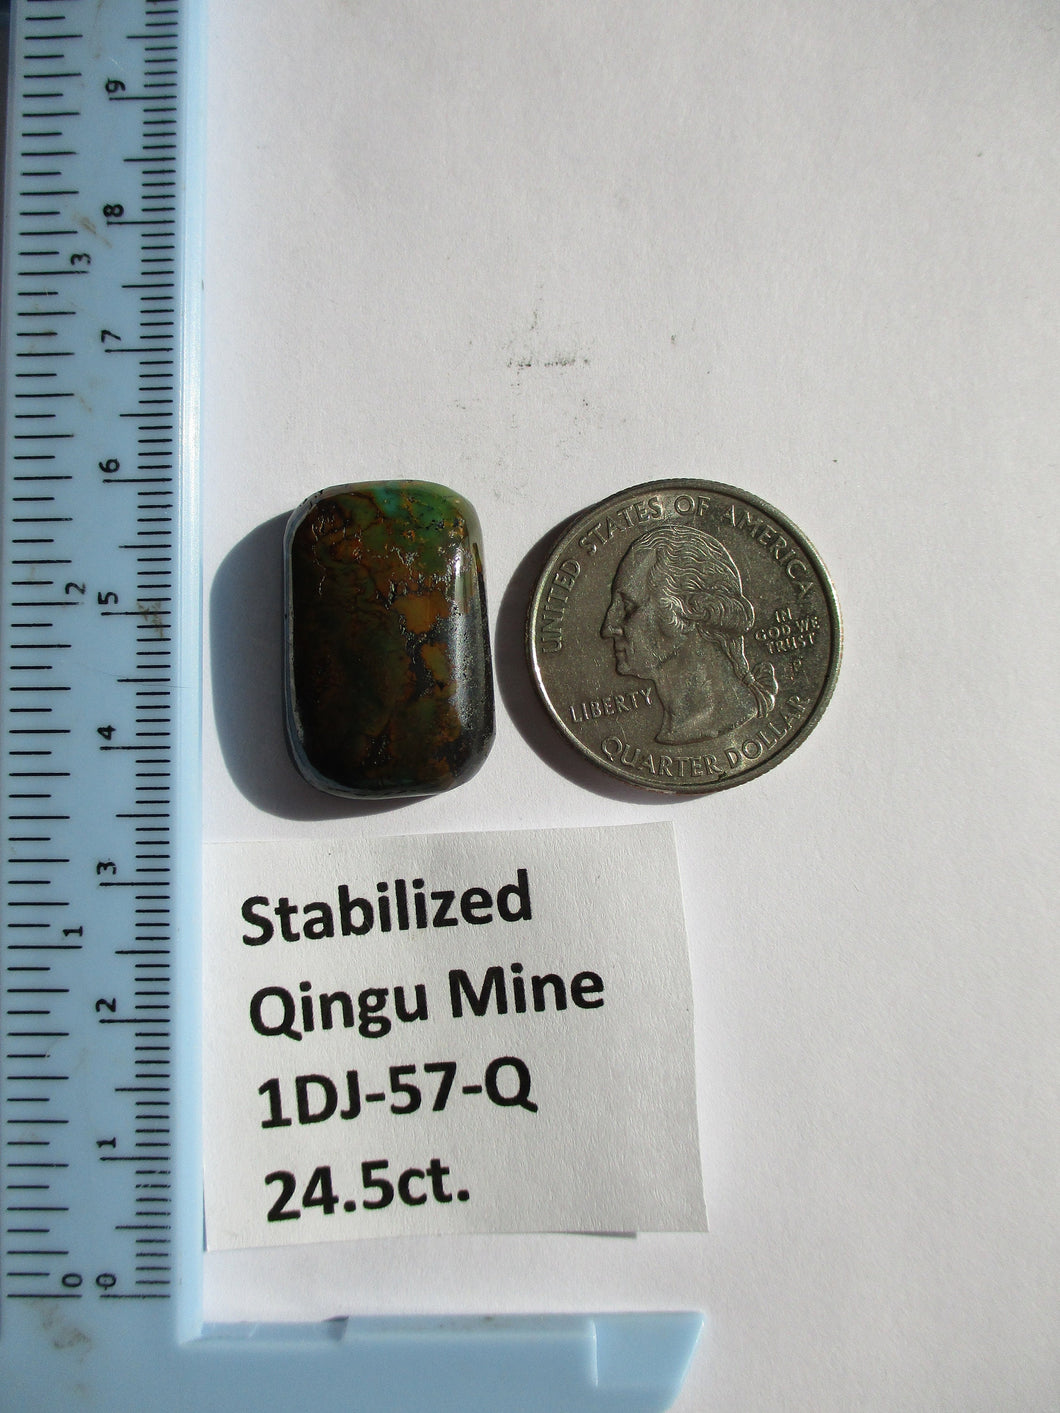 24.5 ct. (24x16x6 mm) Stabilized Qingu Mine (Hubei) Turquoise Cabochon Gemstone, 1DJ 57